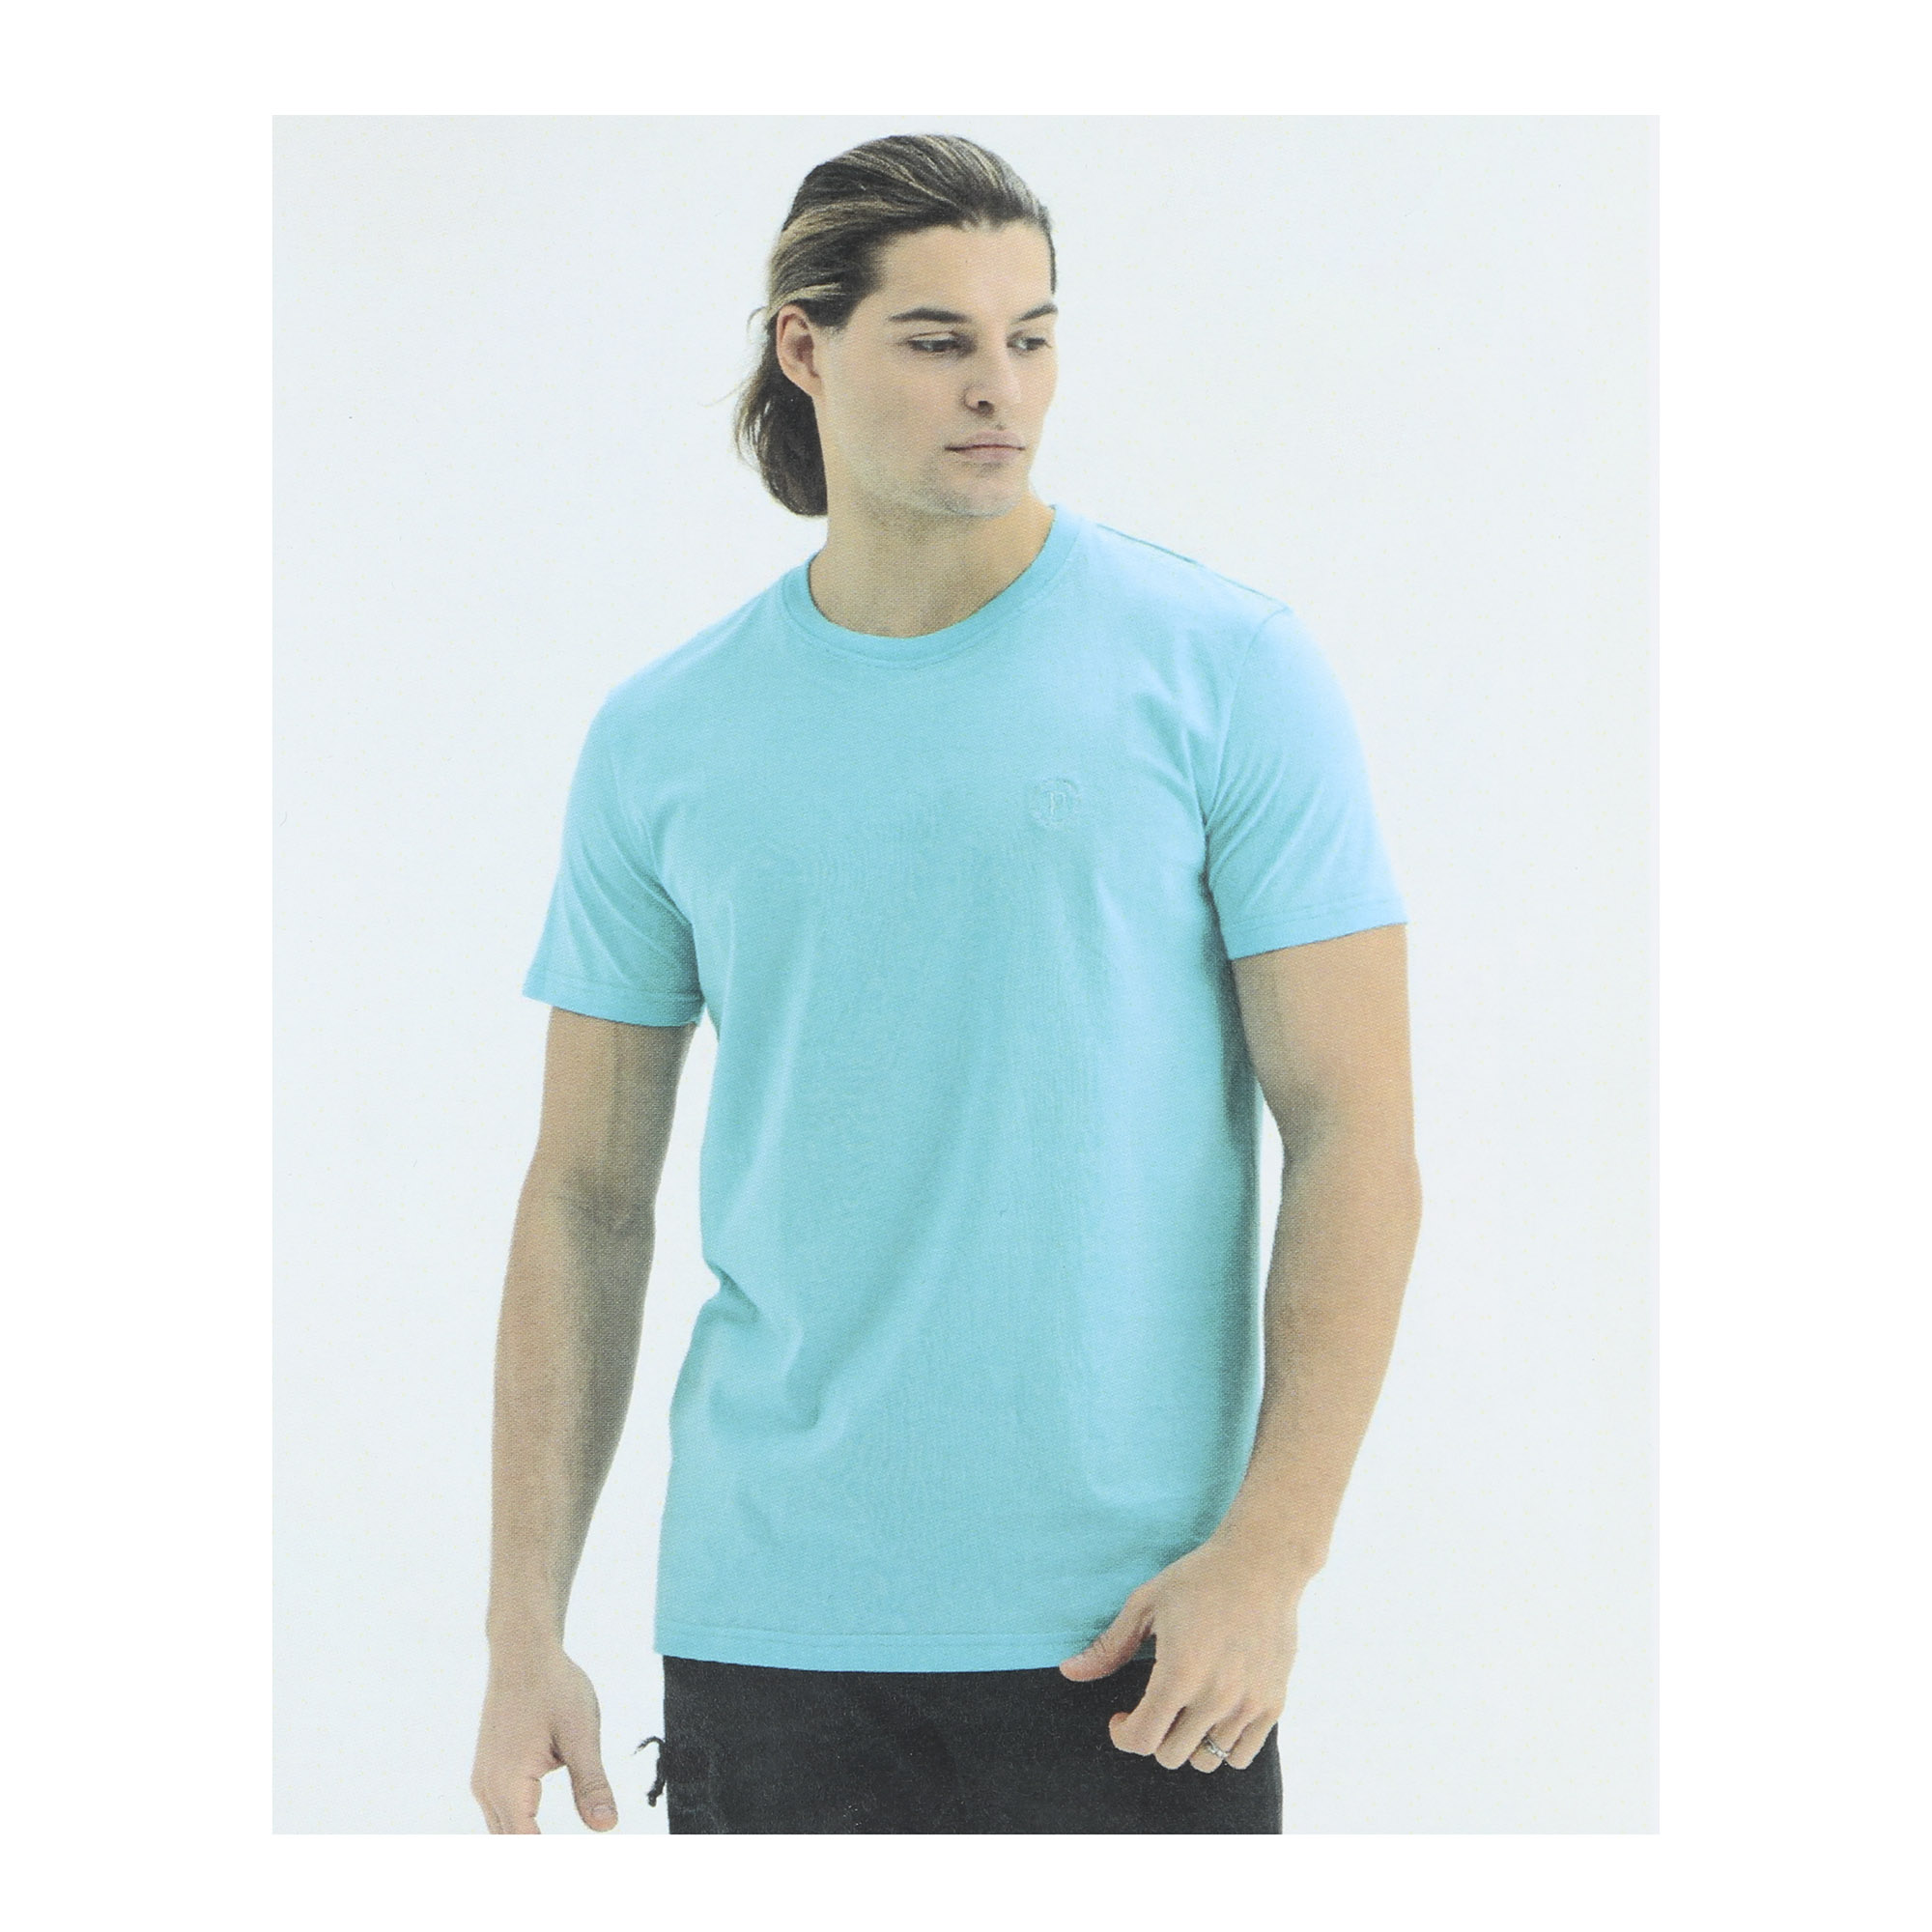 Мужская футболка Pantelemone MF-914 50 ментоловая, цвет ментоловый, размер 50 - фото 4